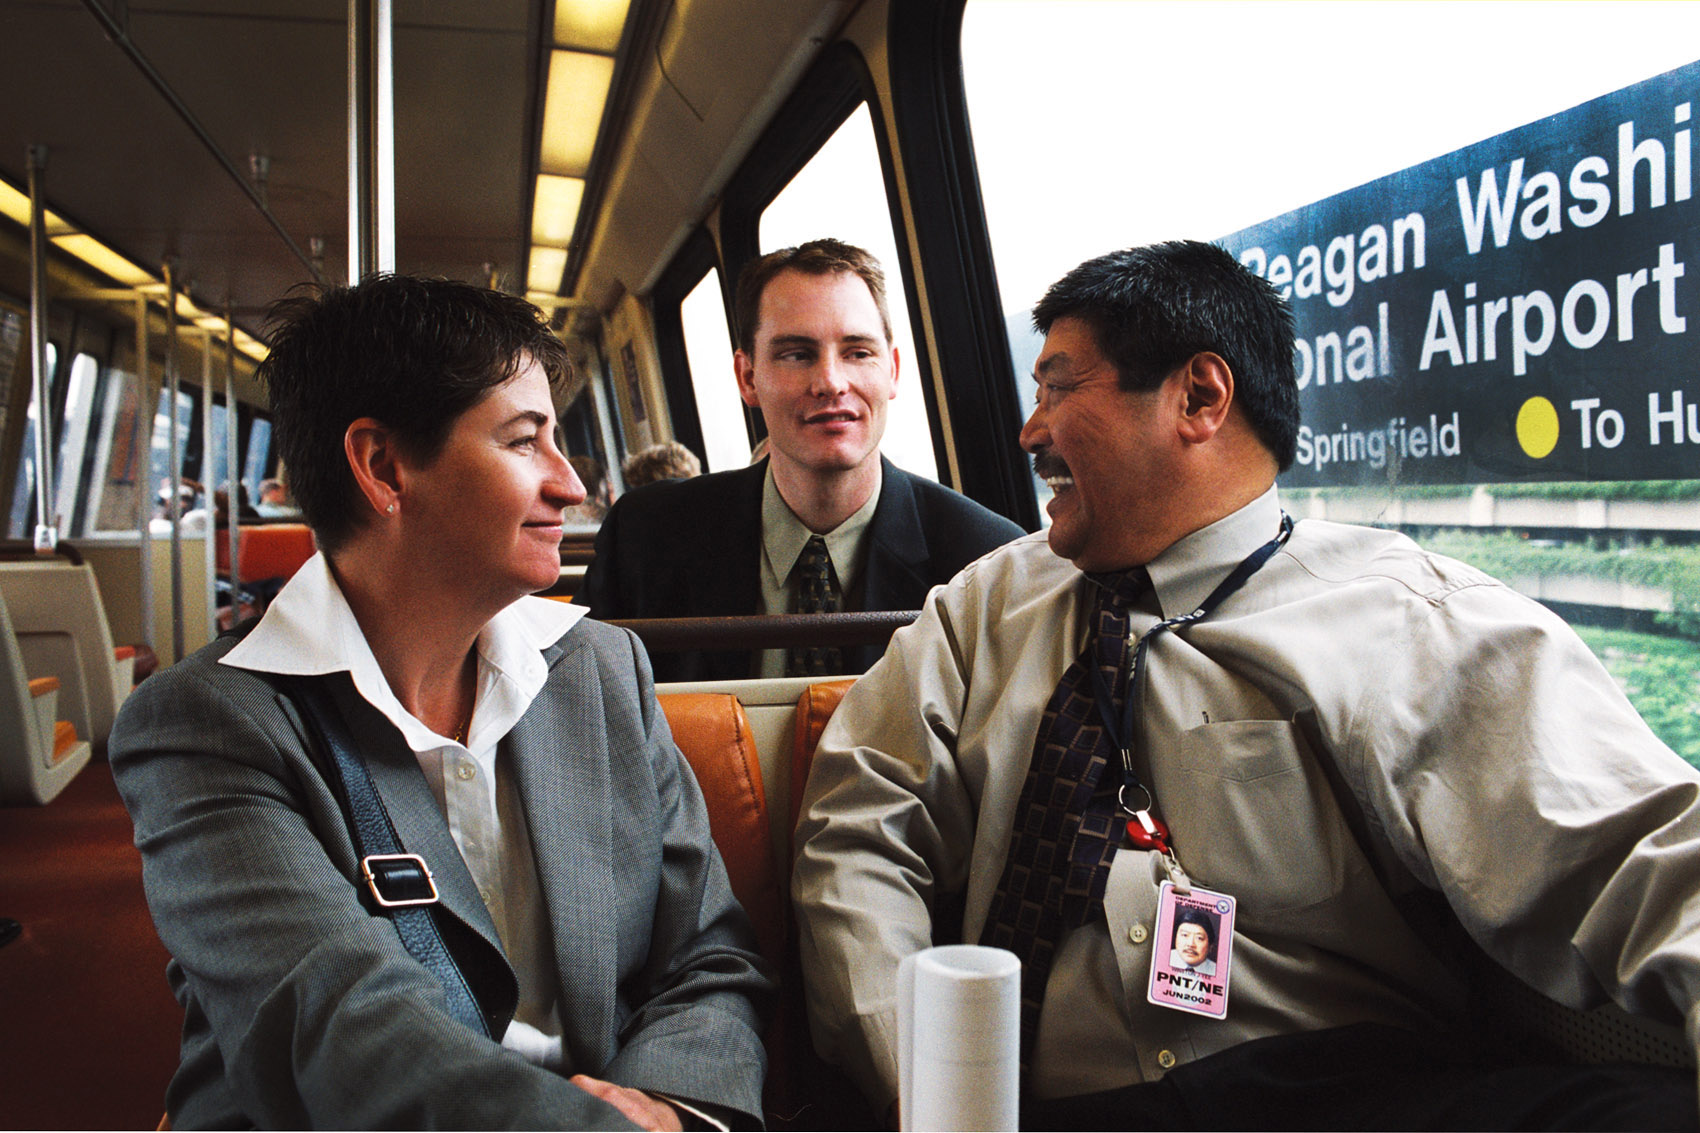 D.C. commuters on public transportation near pentagon  by Scott Dobry Pictures photographer in Omaha, Nebraska